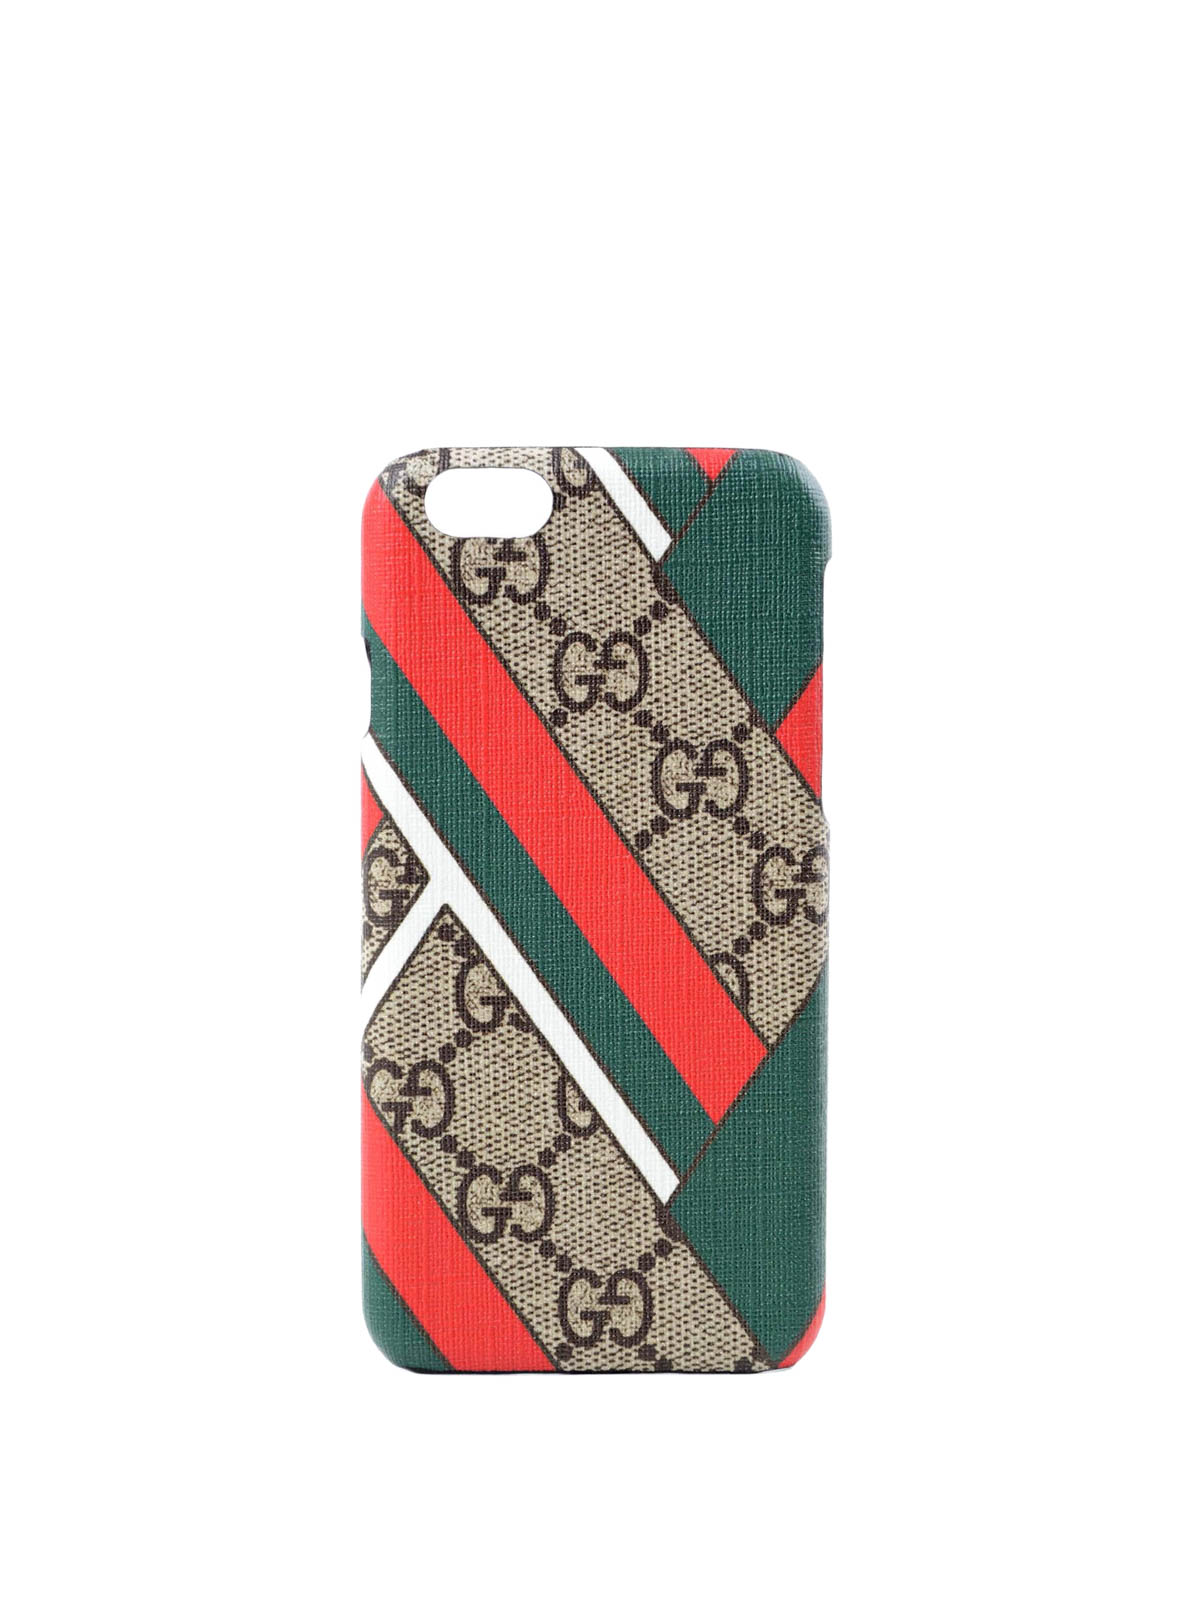 & Covers Gucci - Chevron print iPhone 6 cover - 429237K1M008573